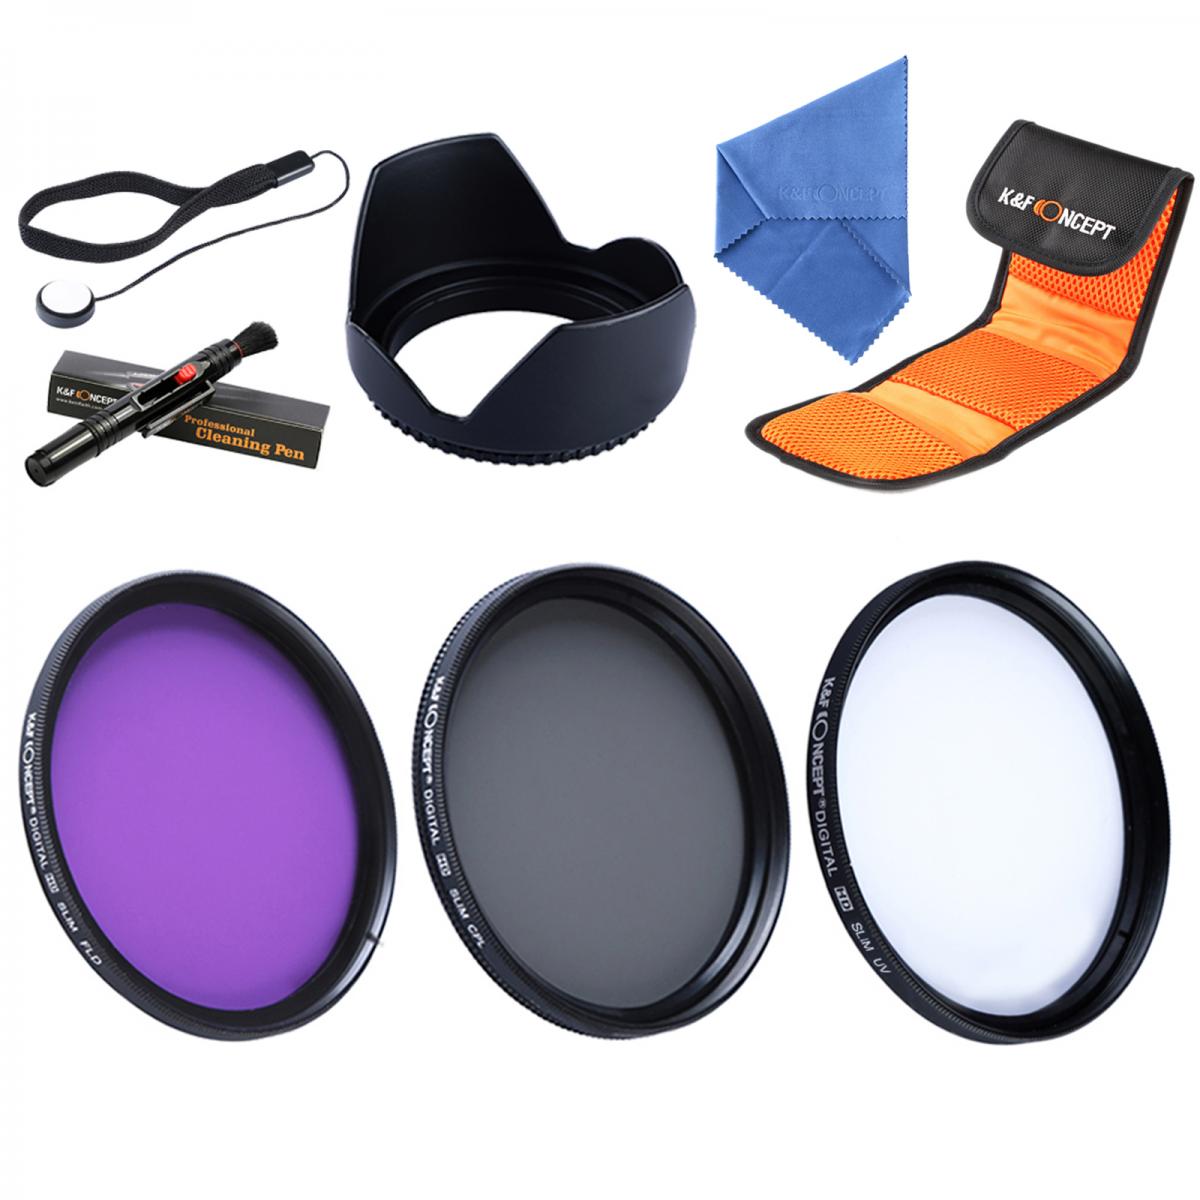 UV,CPL,FLD Compatible w/ All Popular Camera Lens Models includes Nylon Carry Case Polaroid Optics 55mm 3-Piece Filter Kit Set